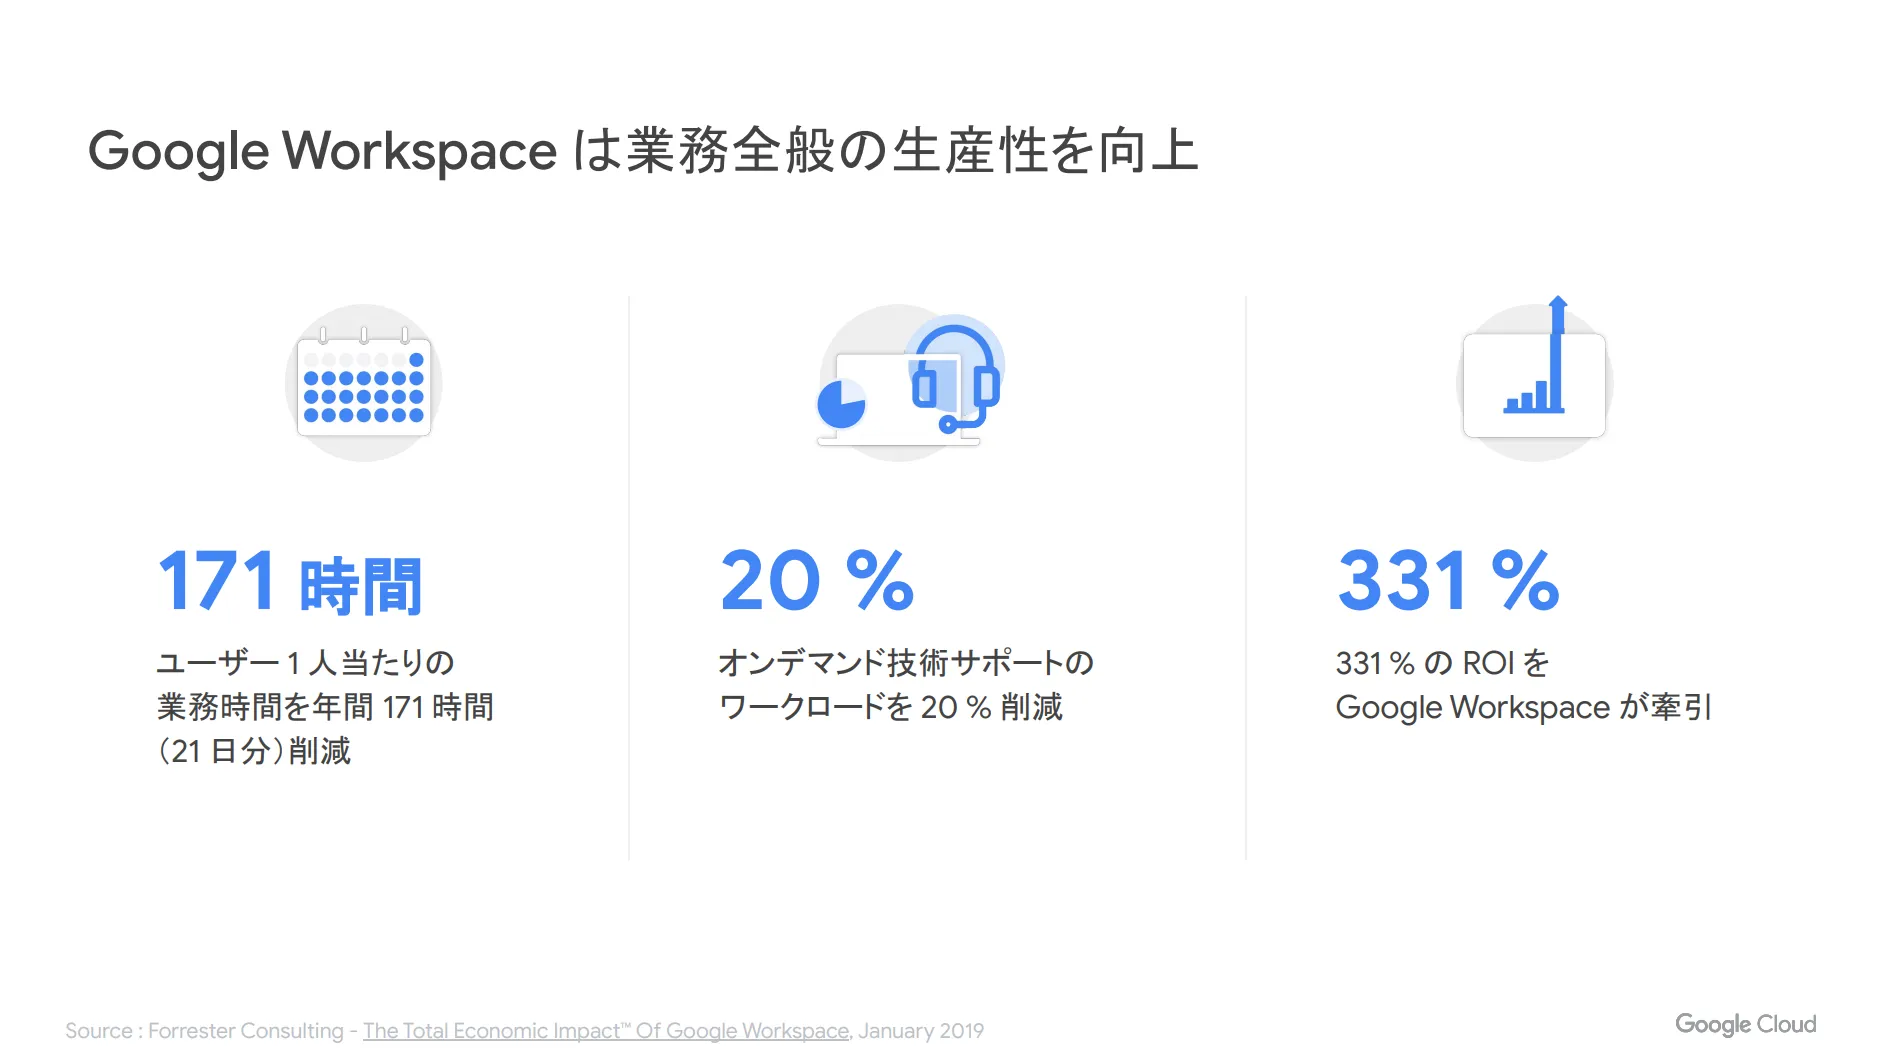 Google Workspace で生産性向上に繋がった調査結果